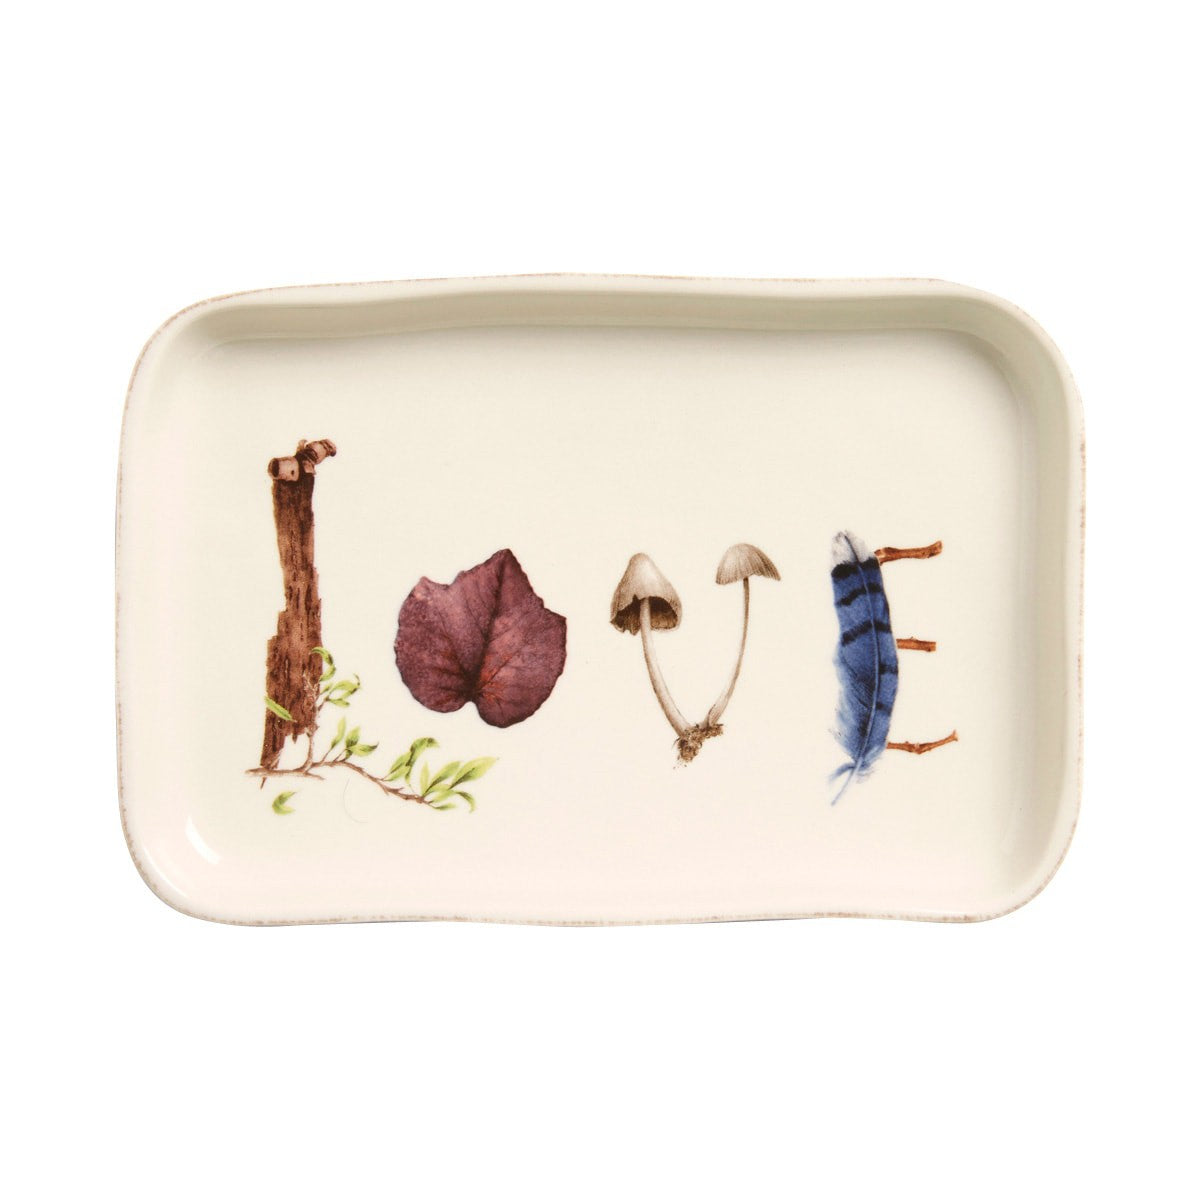 valentines gift ideas for him & her - juliska love plate